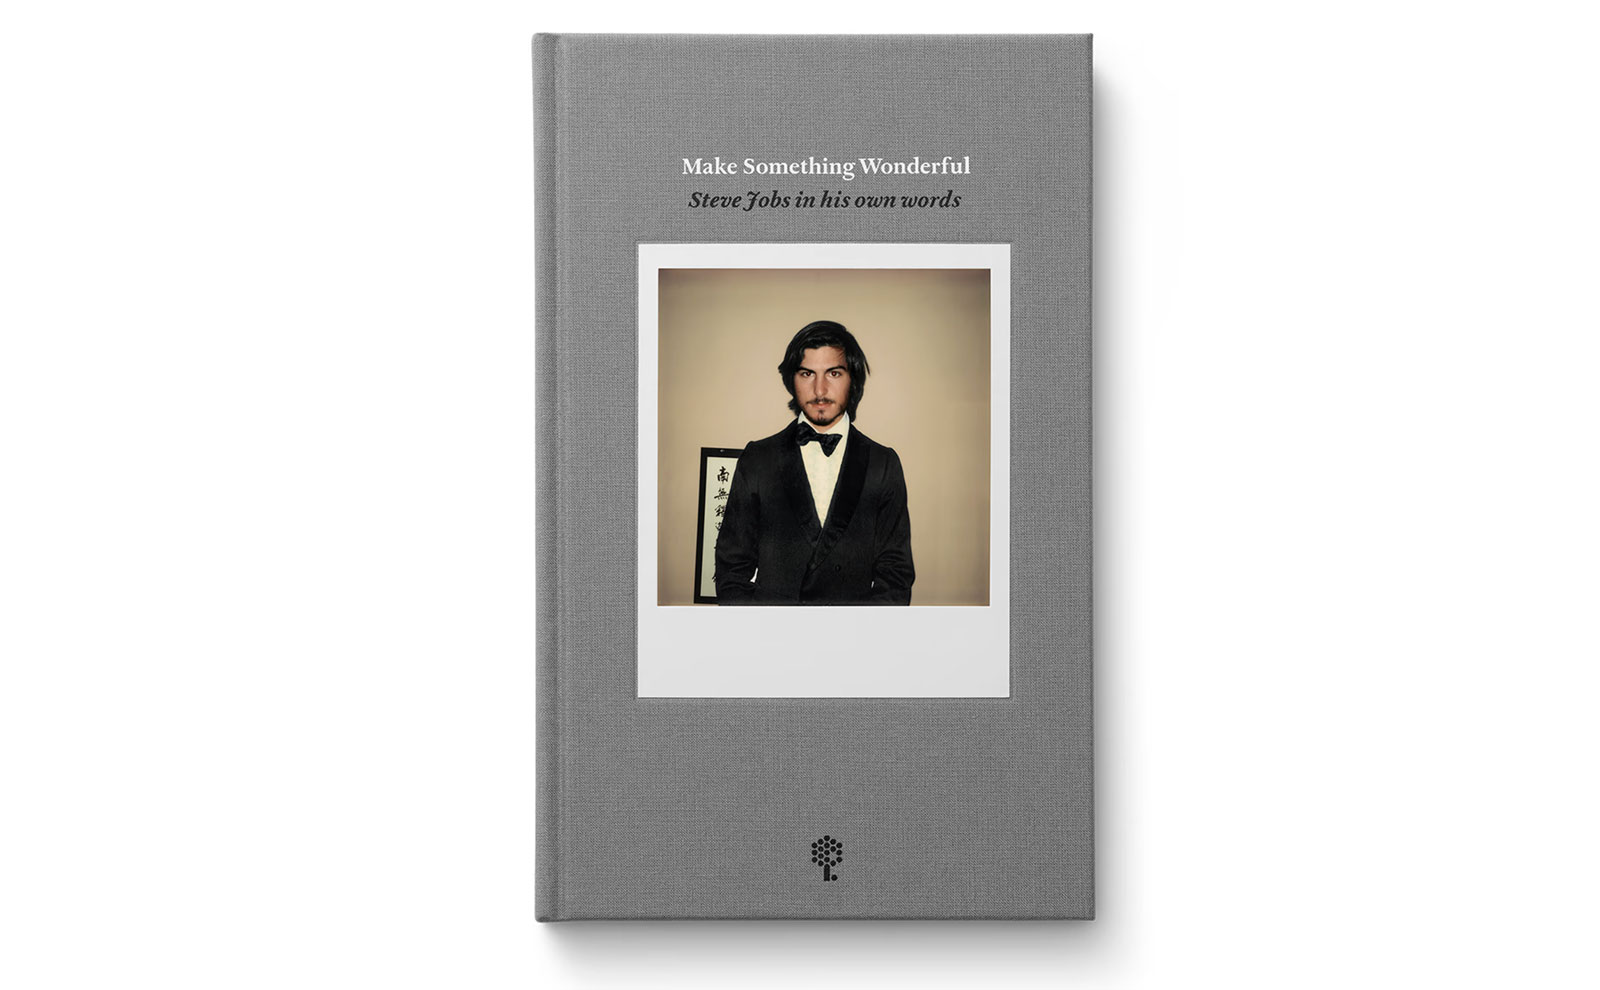 Make Something Wonderful, nuovo libro su Steve Jobs (come leggerlo gratis) 1